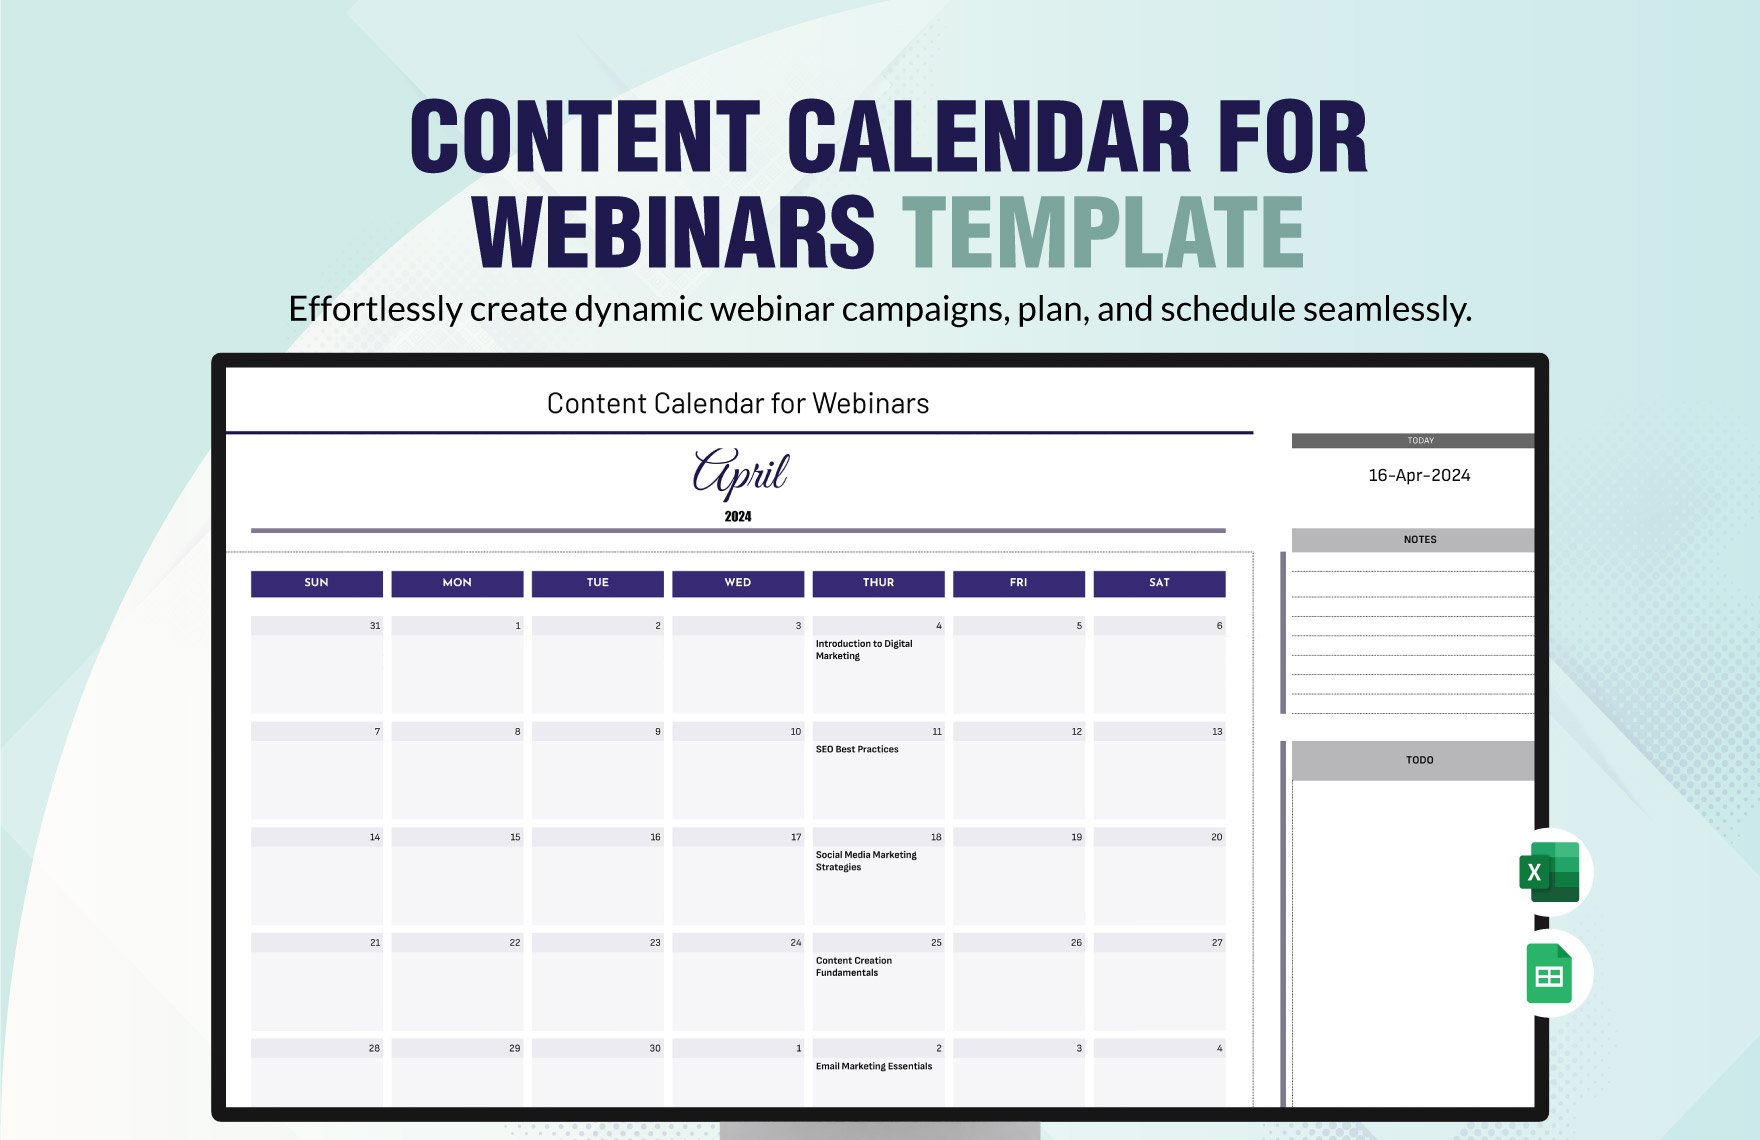 Content Calendar for Webinars Template in Excel, Google Sheets